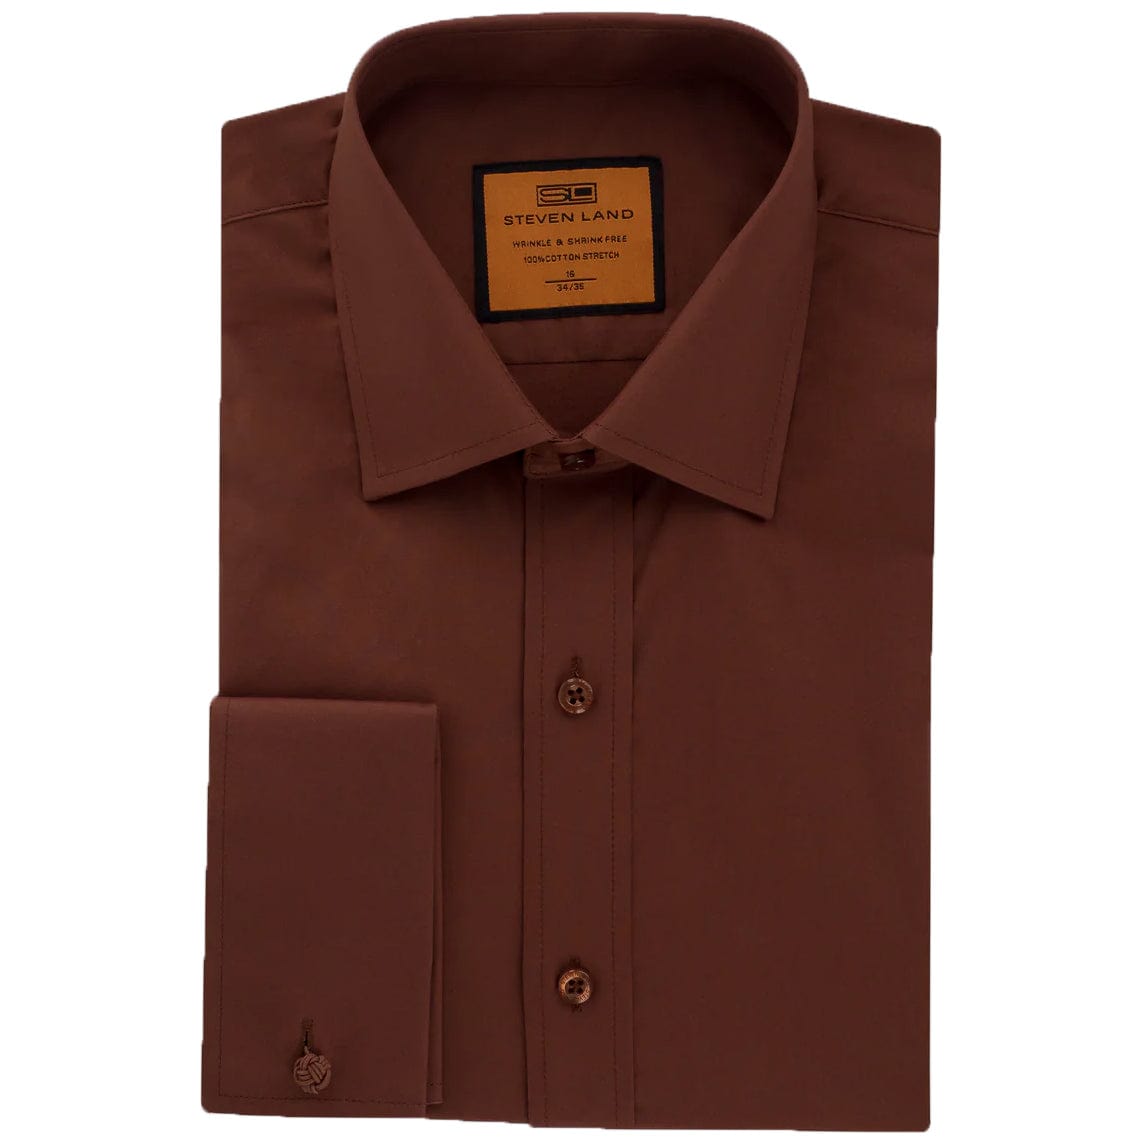 LND NECKWEAR INC. S CF BROWN / 16.5 Steven Land Dress Shirt| Classic Fit | French Cuff | 100% Cotton/Ds115f 6/7